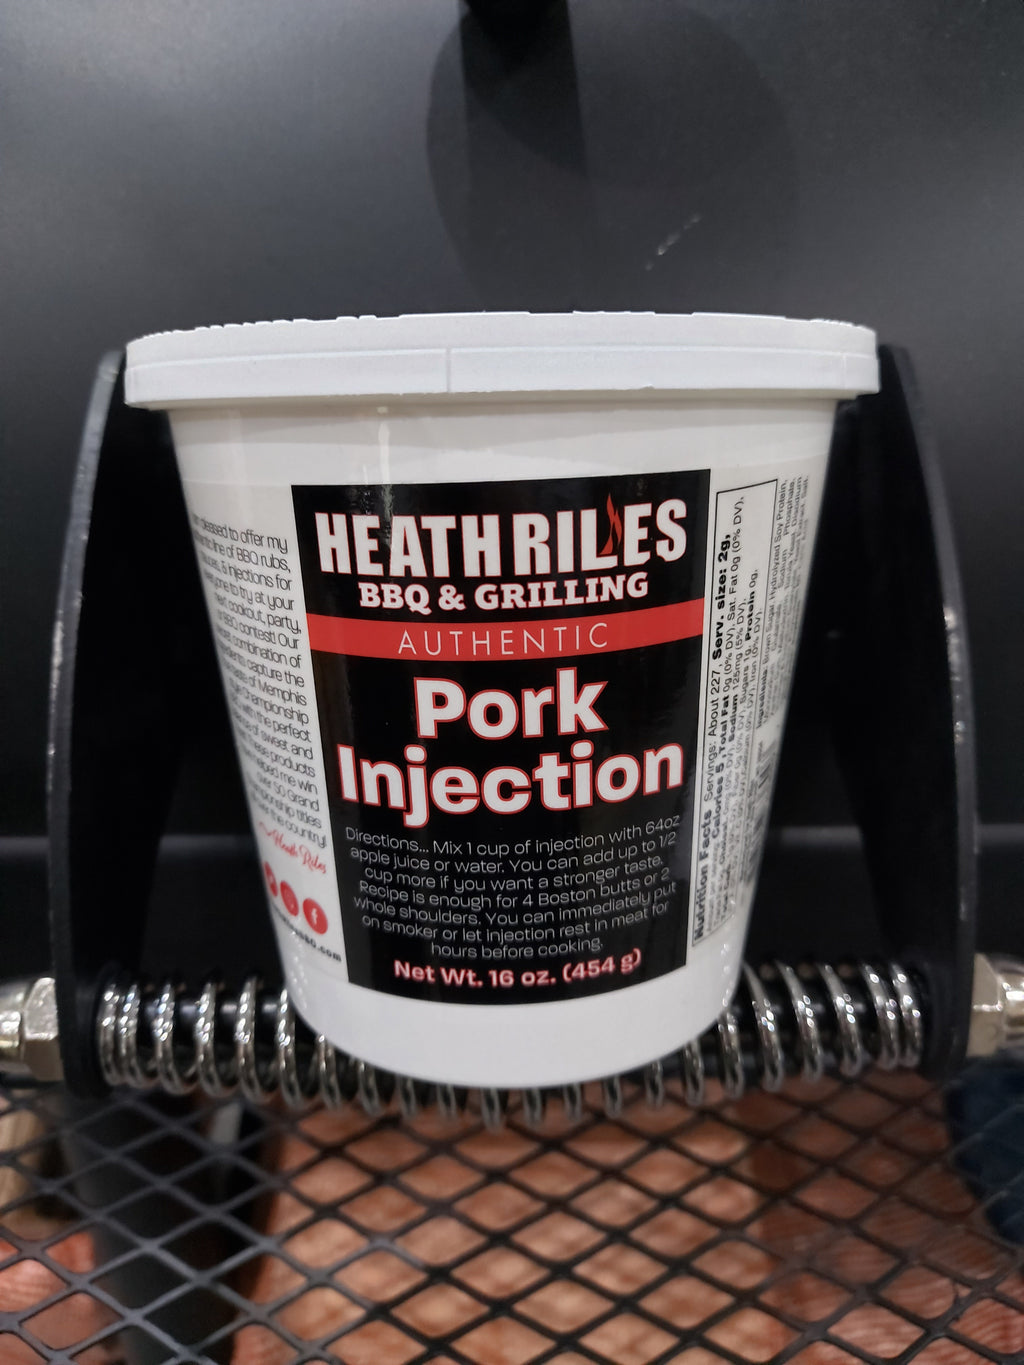 Pork Injection 454g by Heath riles